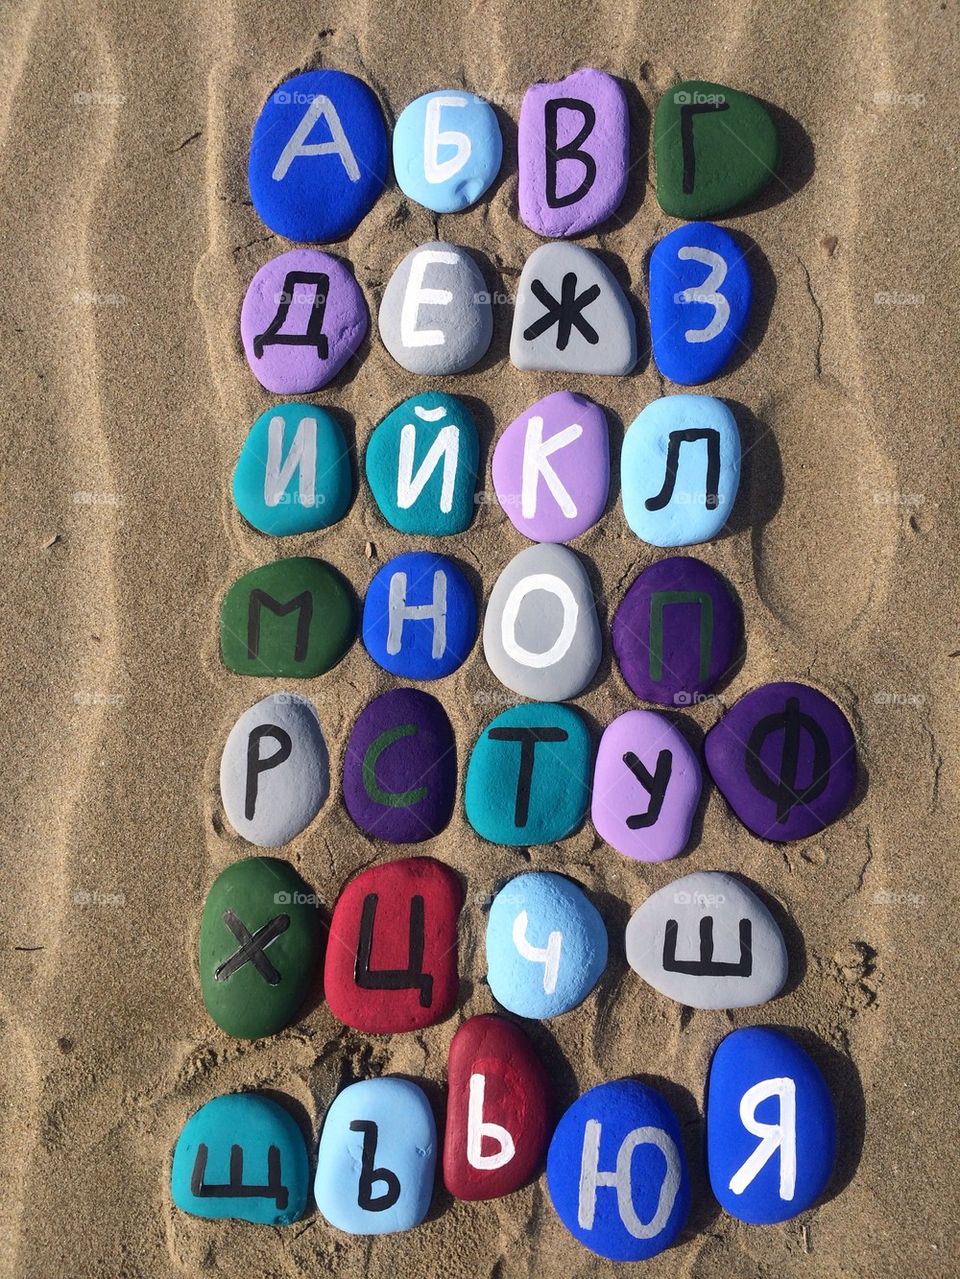 Bulgarian alphabet on stones with national flag